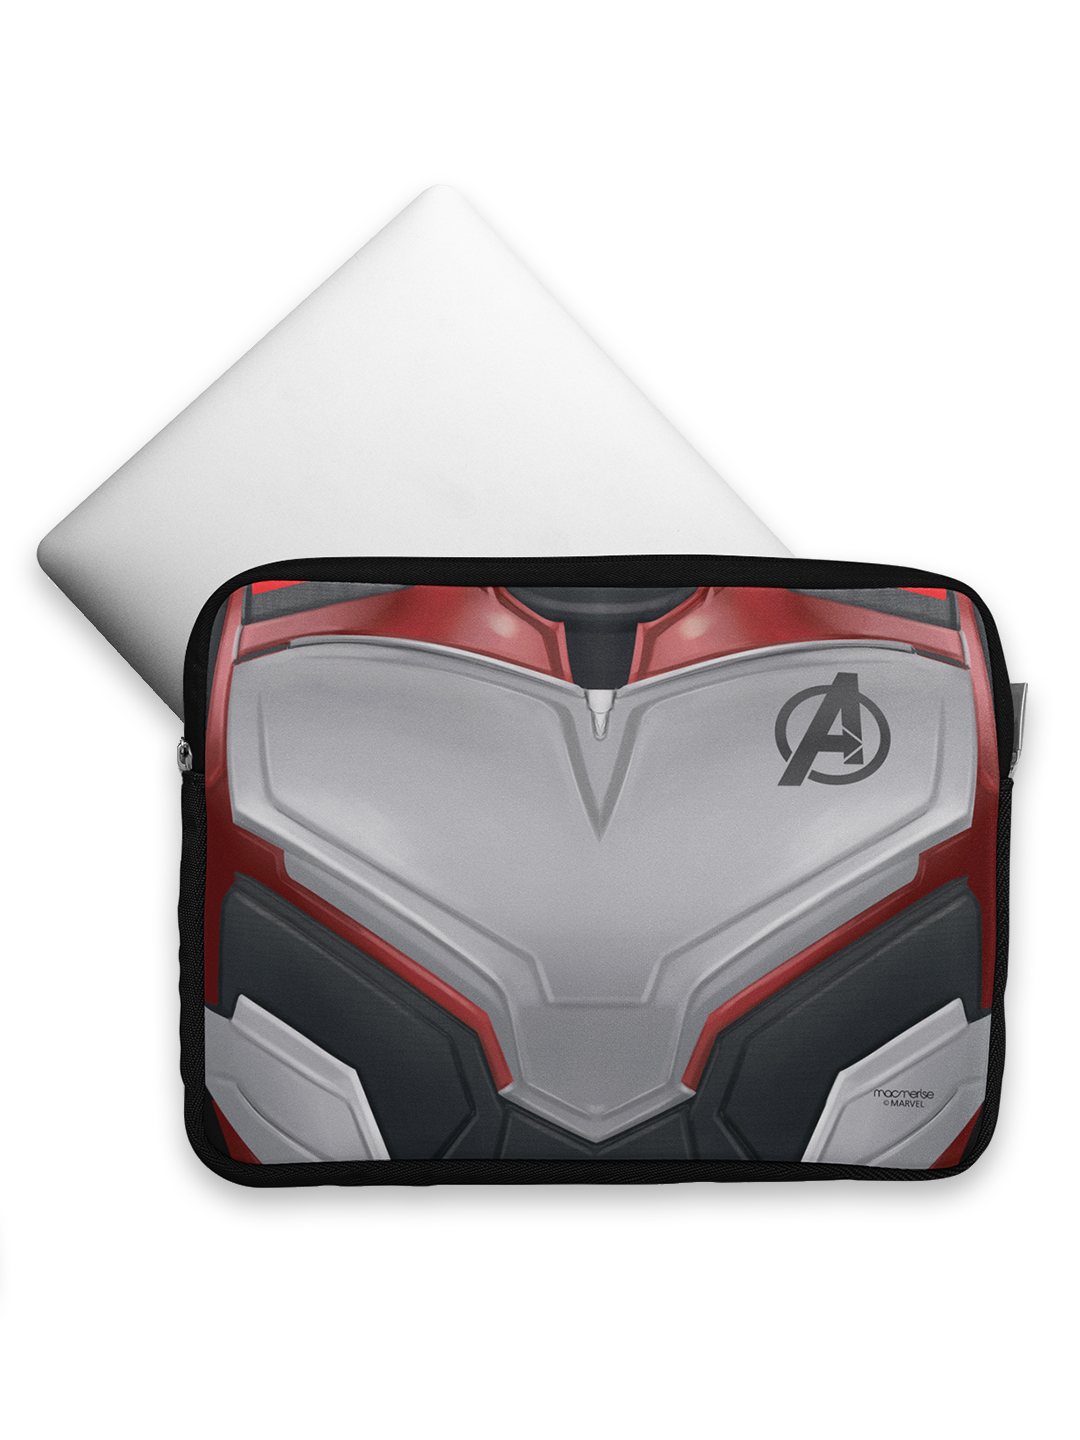 Avengers Endgame Suit - Printed Laptop Sleeves (15 inch)